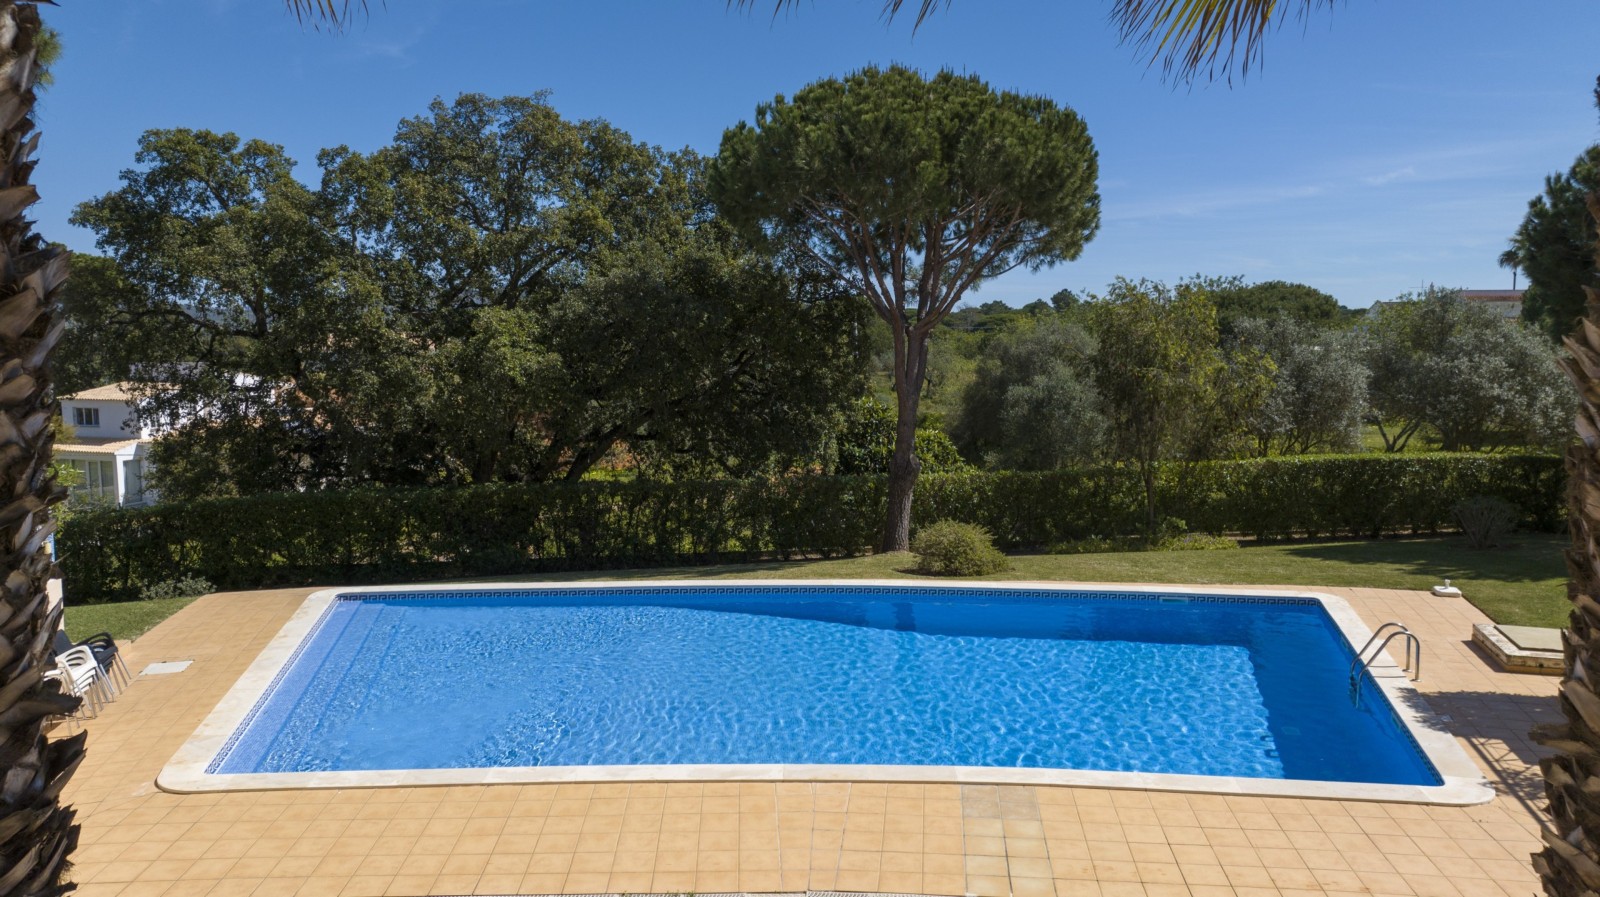 Moradia geminada V4, com piscina, para venda em Vilamoura, Algarve_237491